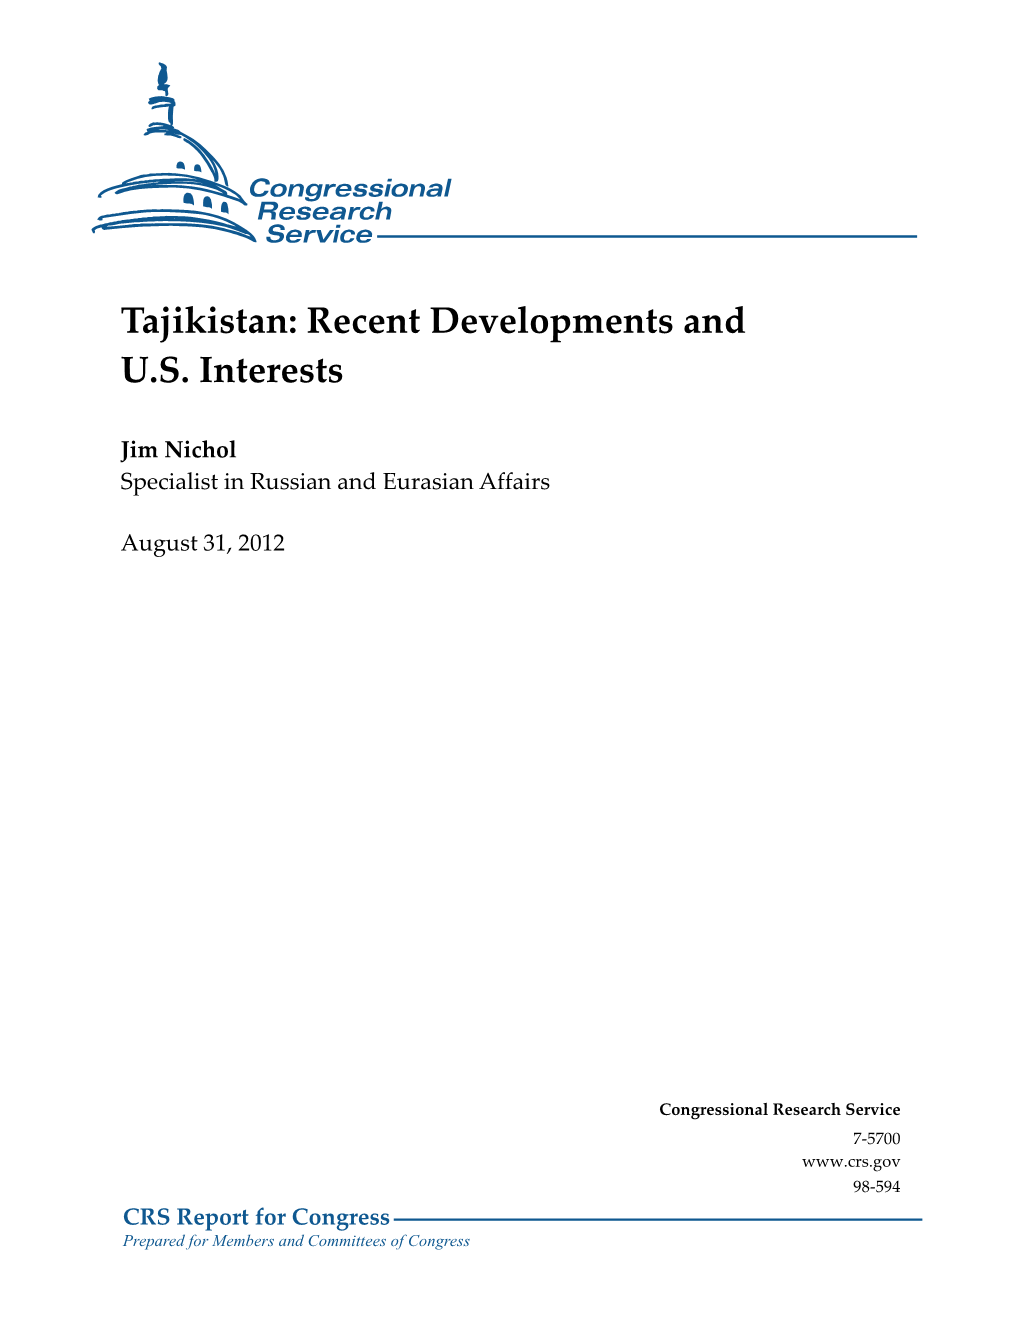 Tajikistan: Recent Developments and U.S